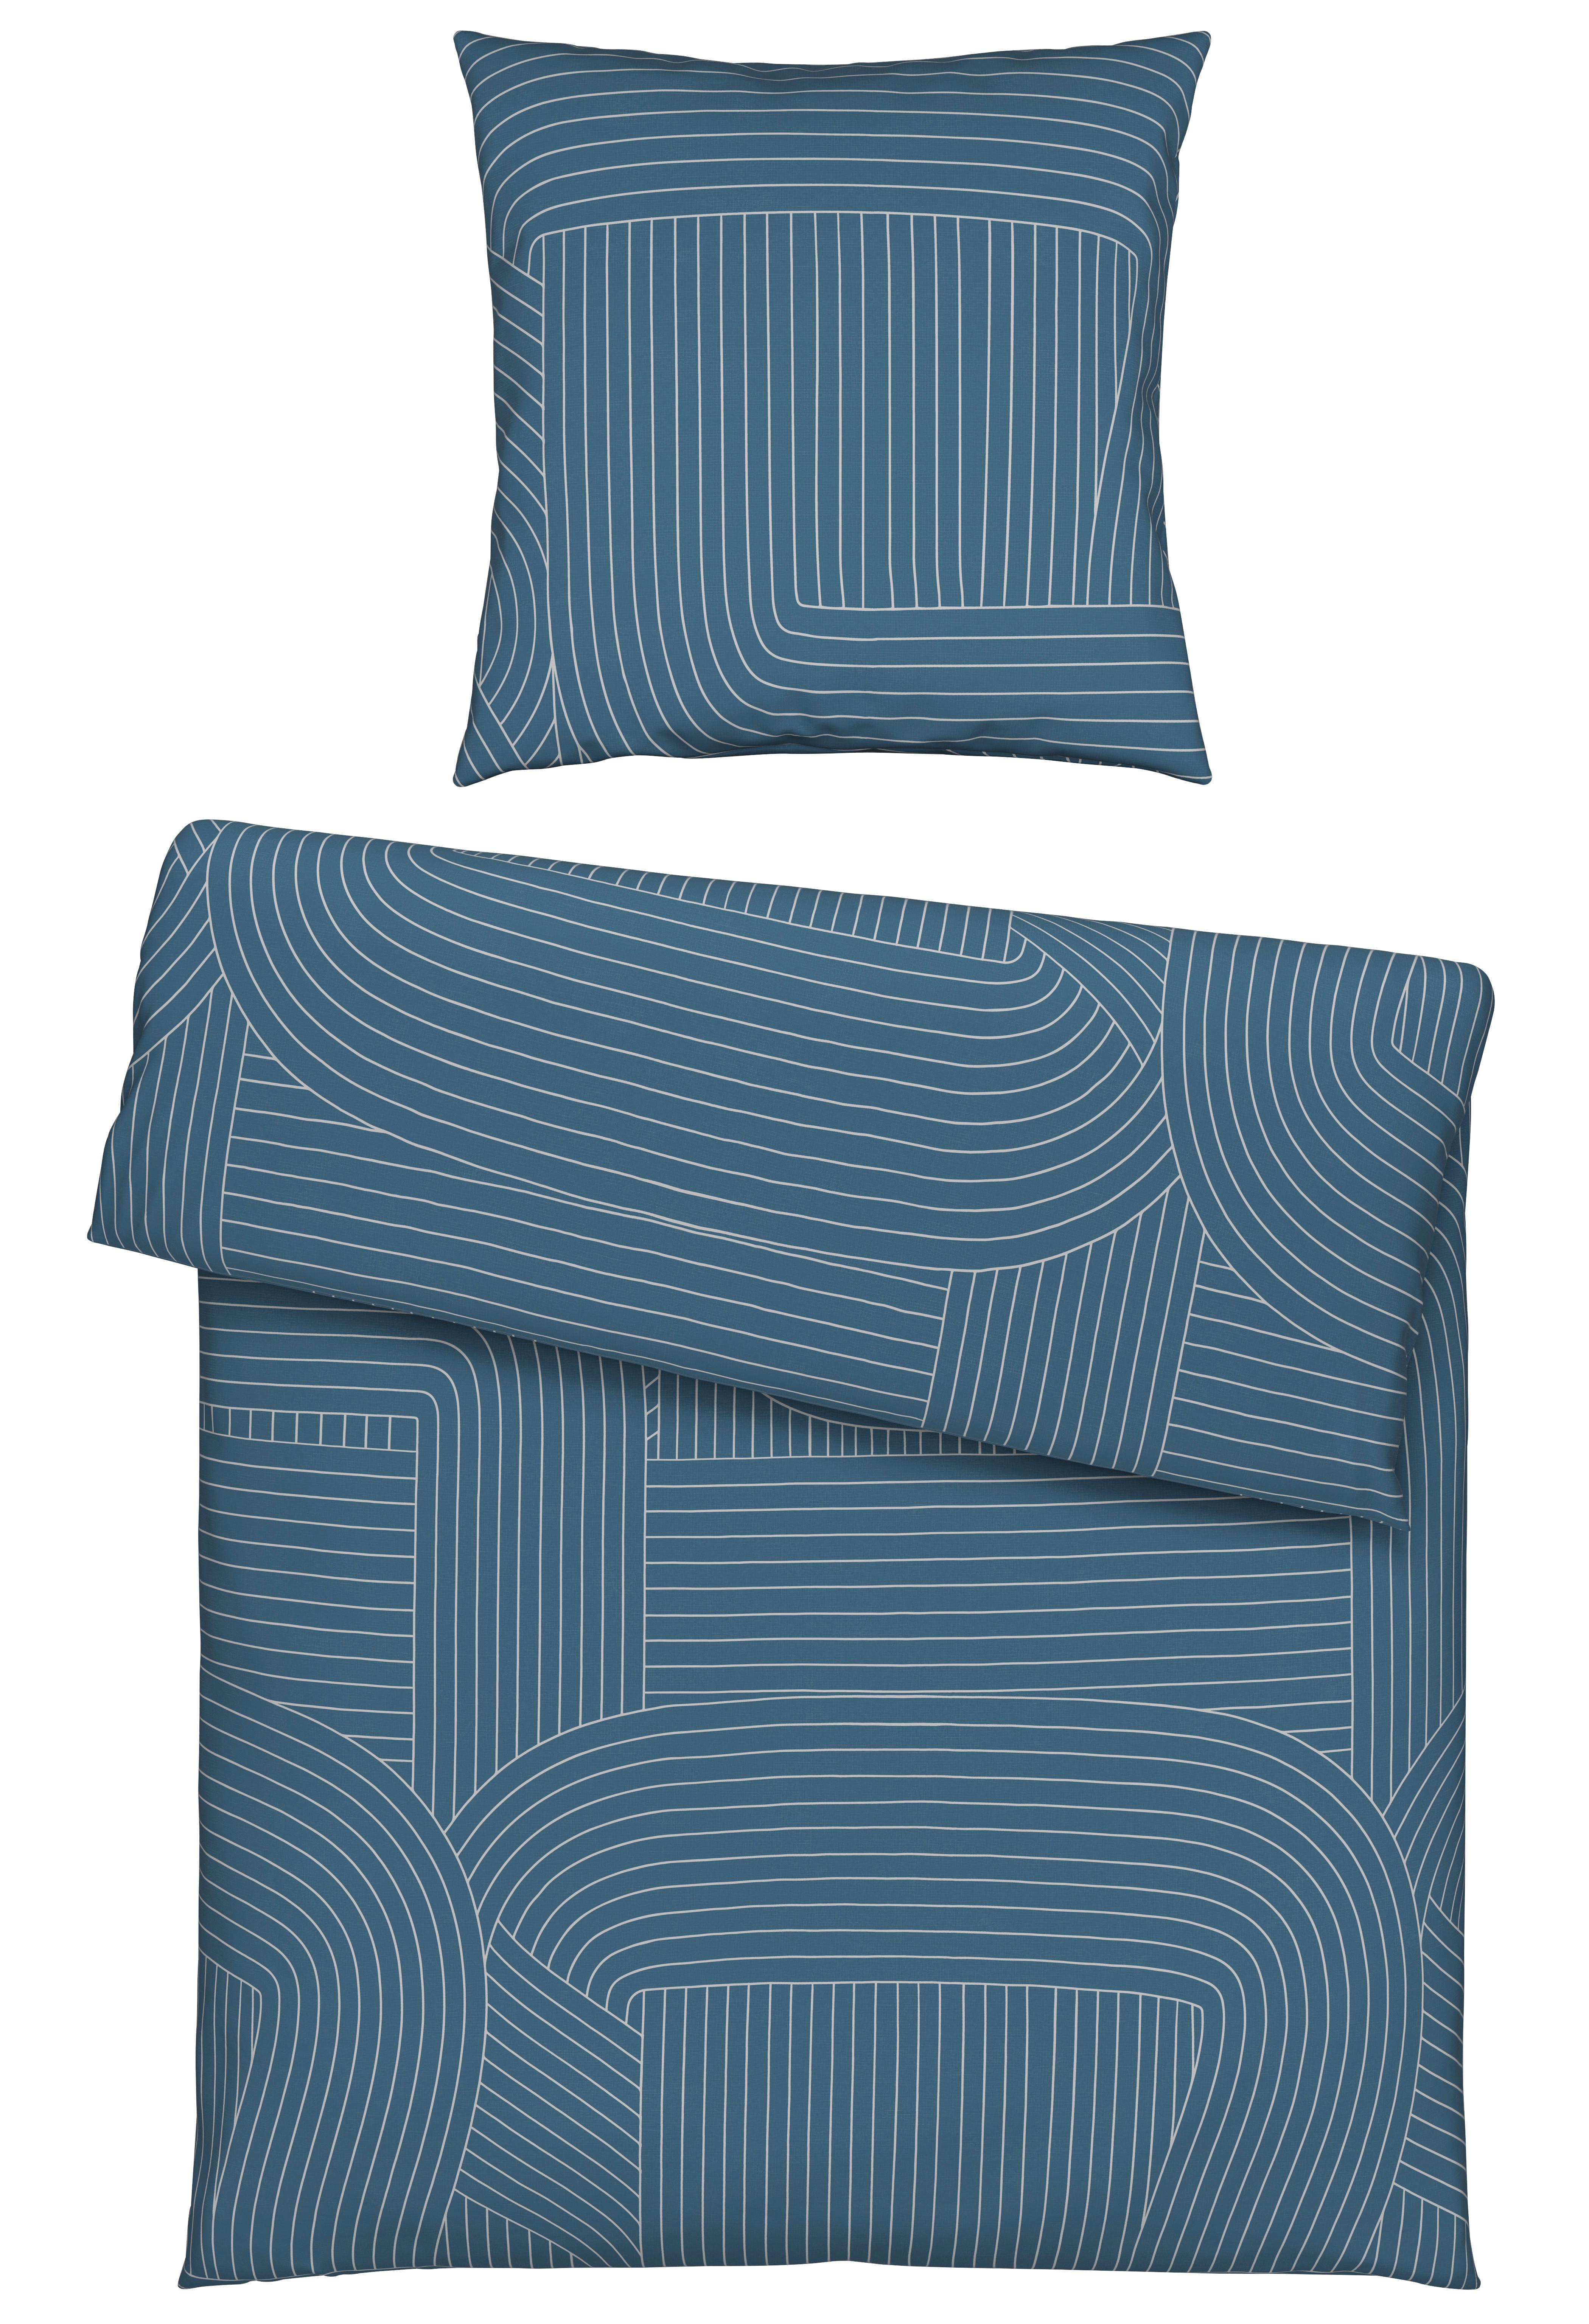 Bettwäsche Scibble ca. 135x200cm - Blau, MODERN, Textil (135/200cm) - Modern Living